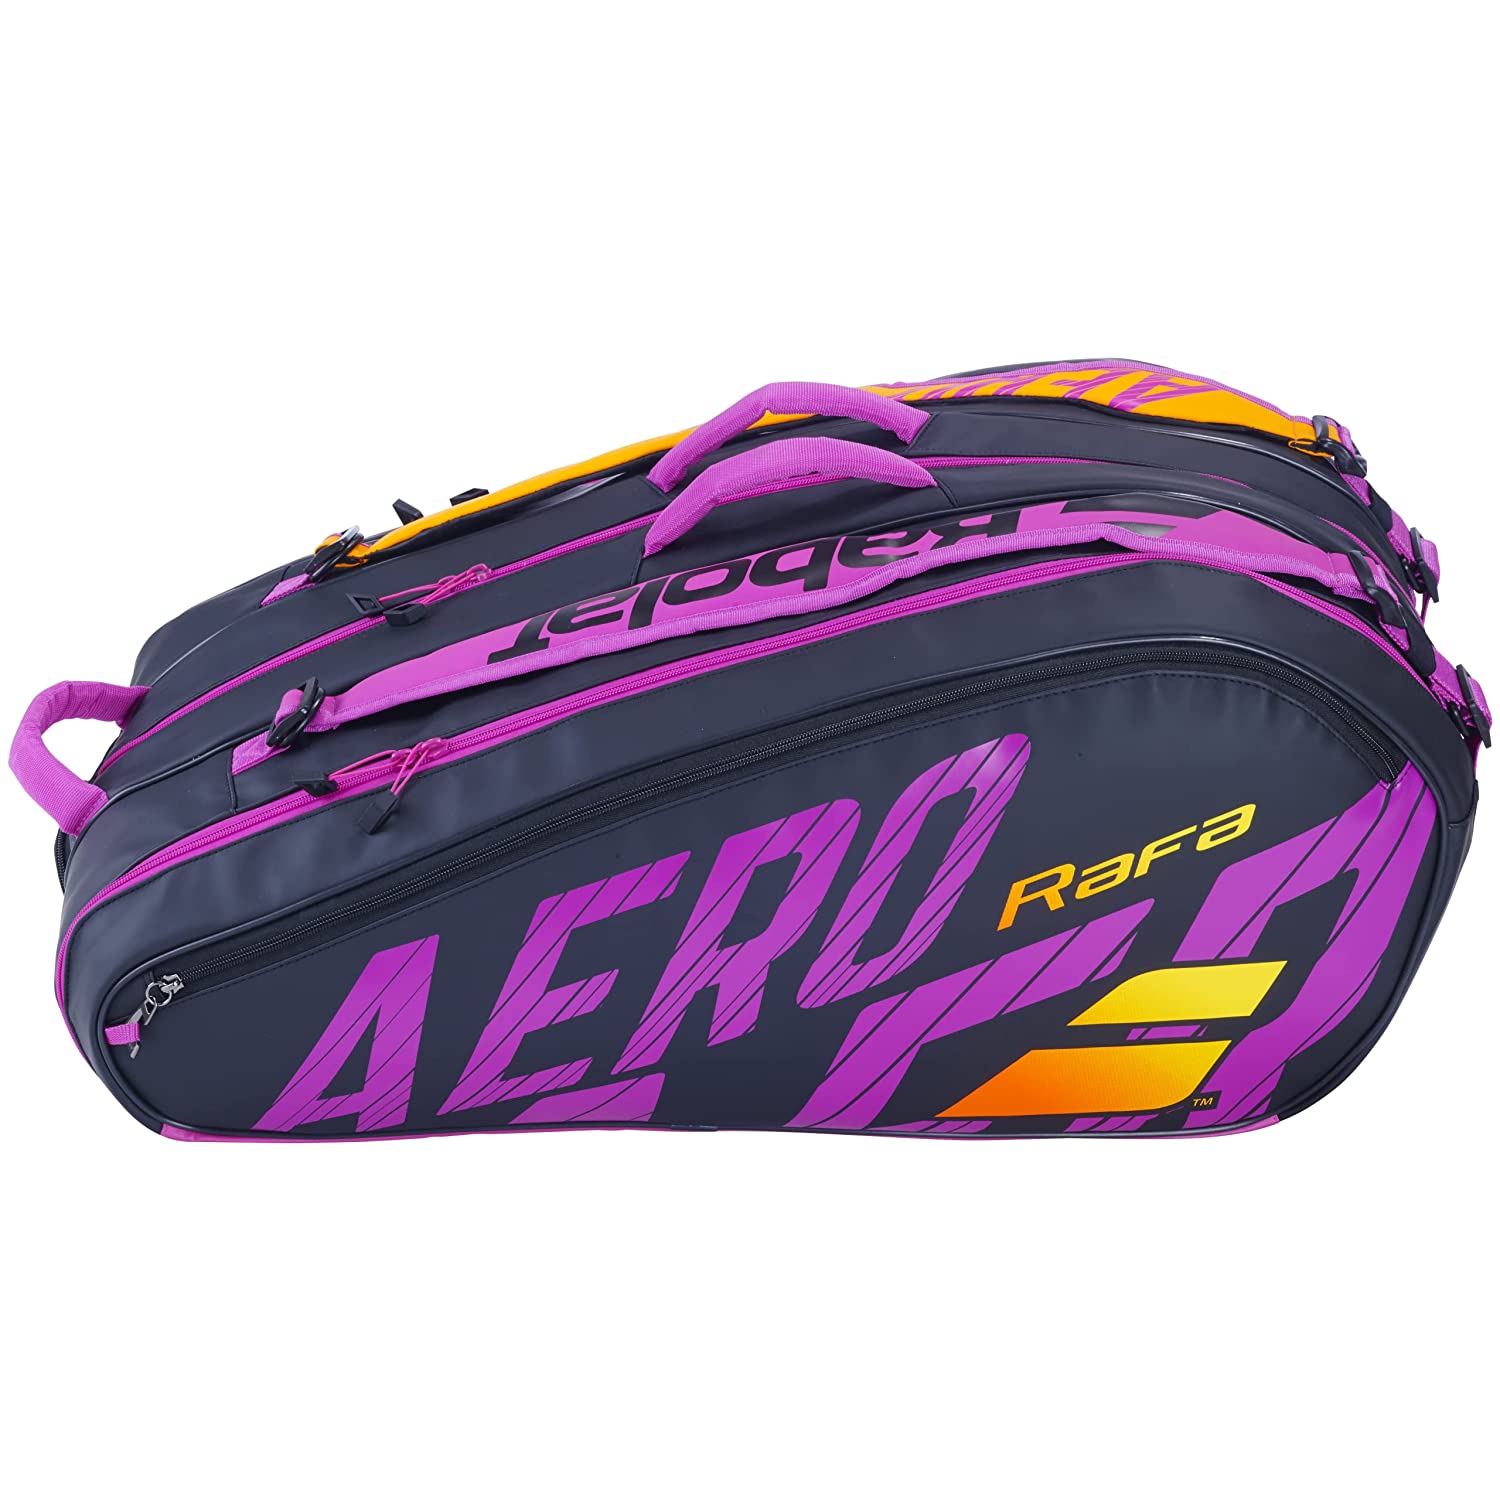 Babolat RH12 Pure Aero Rafa Tennis Kitbag, Black/Orange/Purple - Best Price online Prokicksports.com